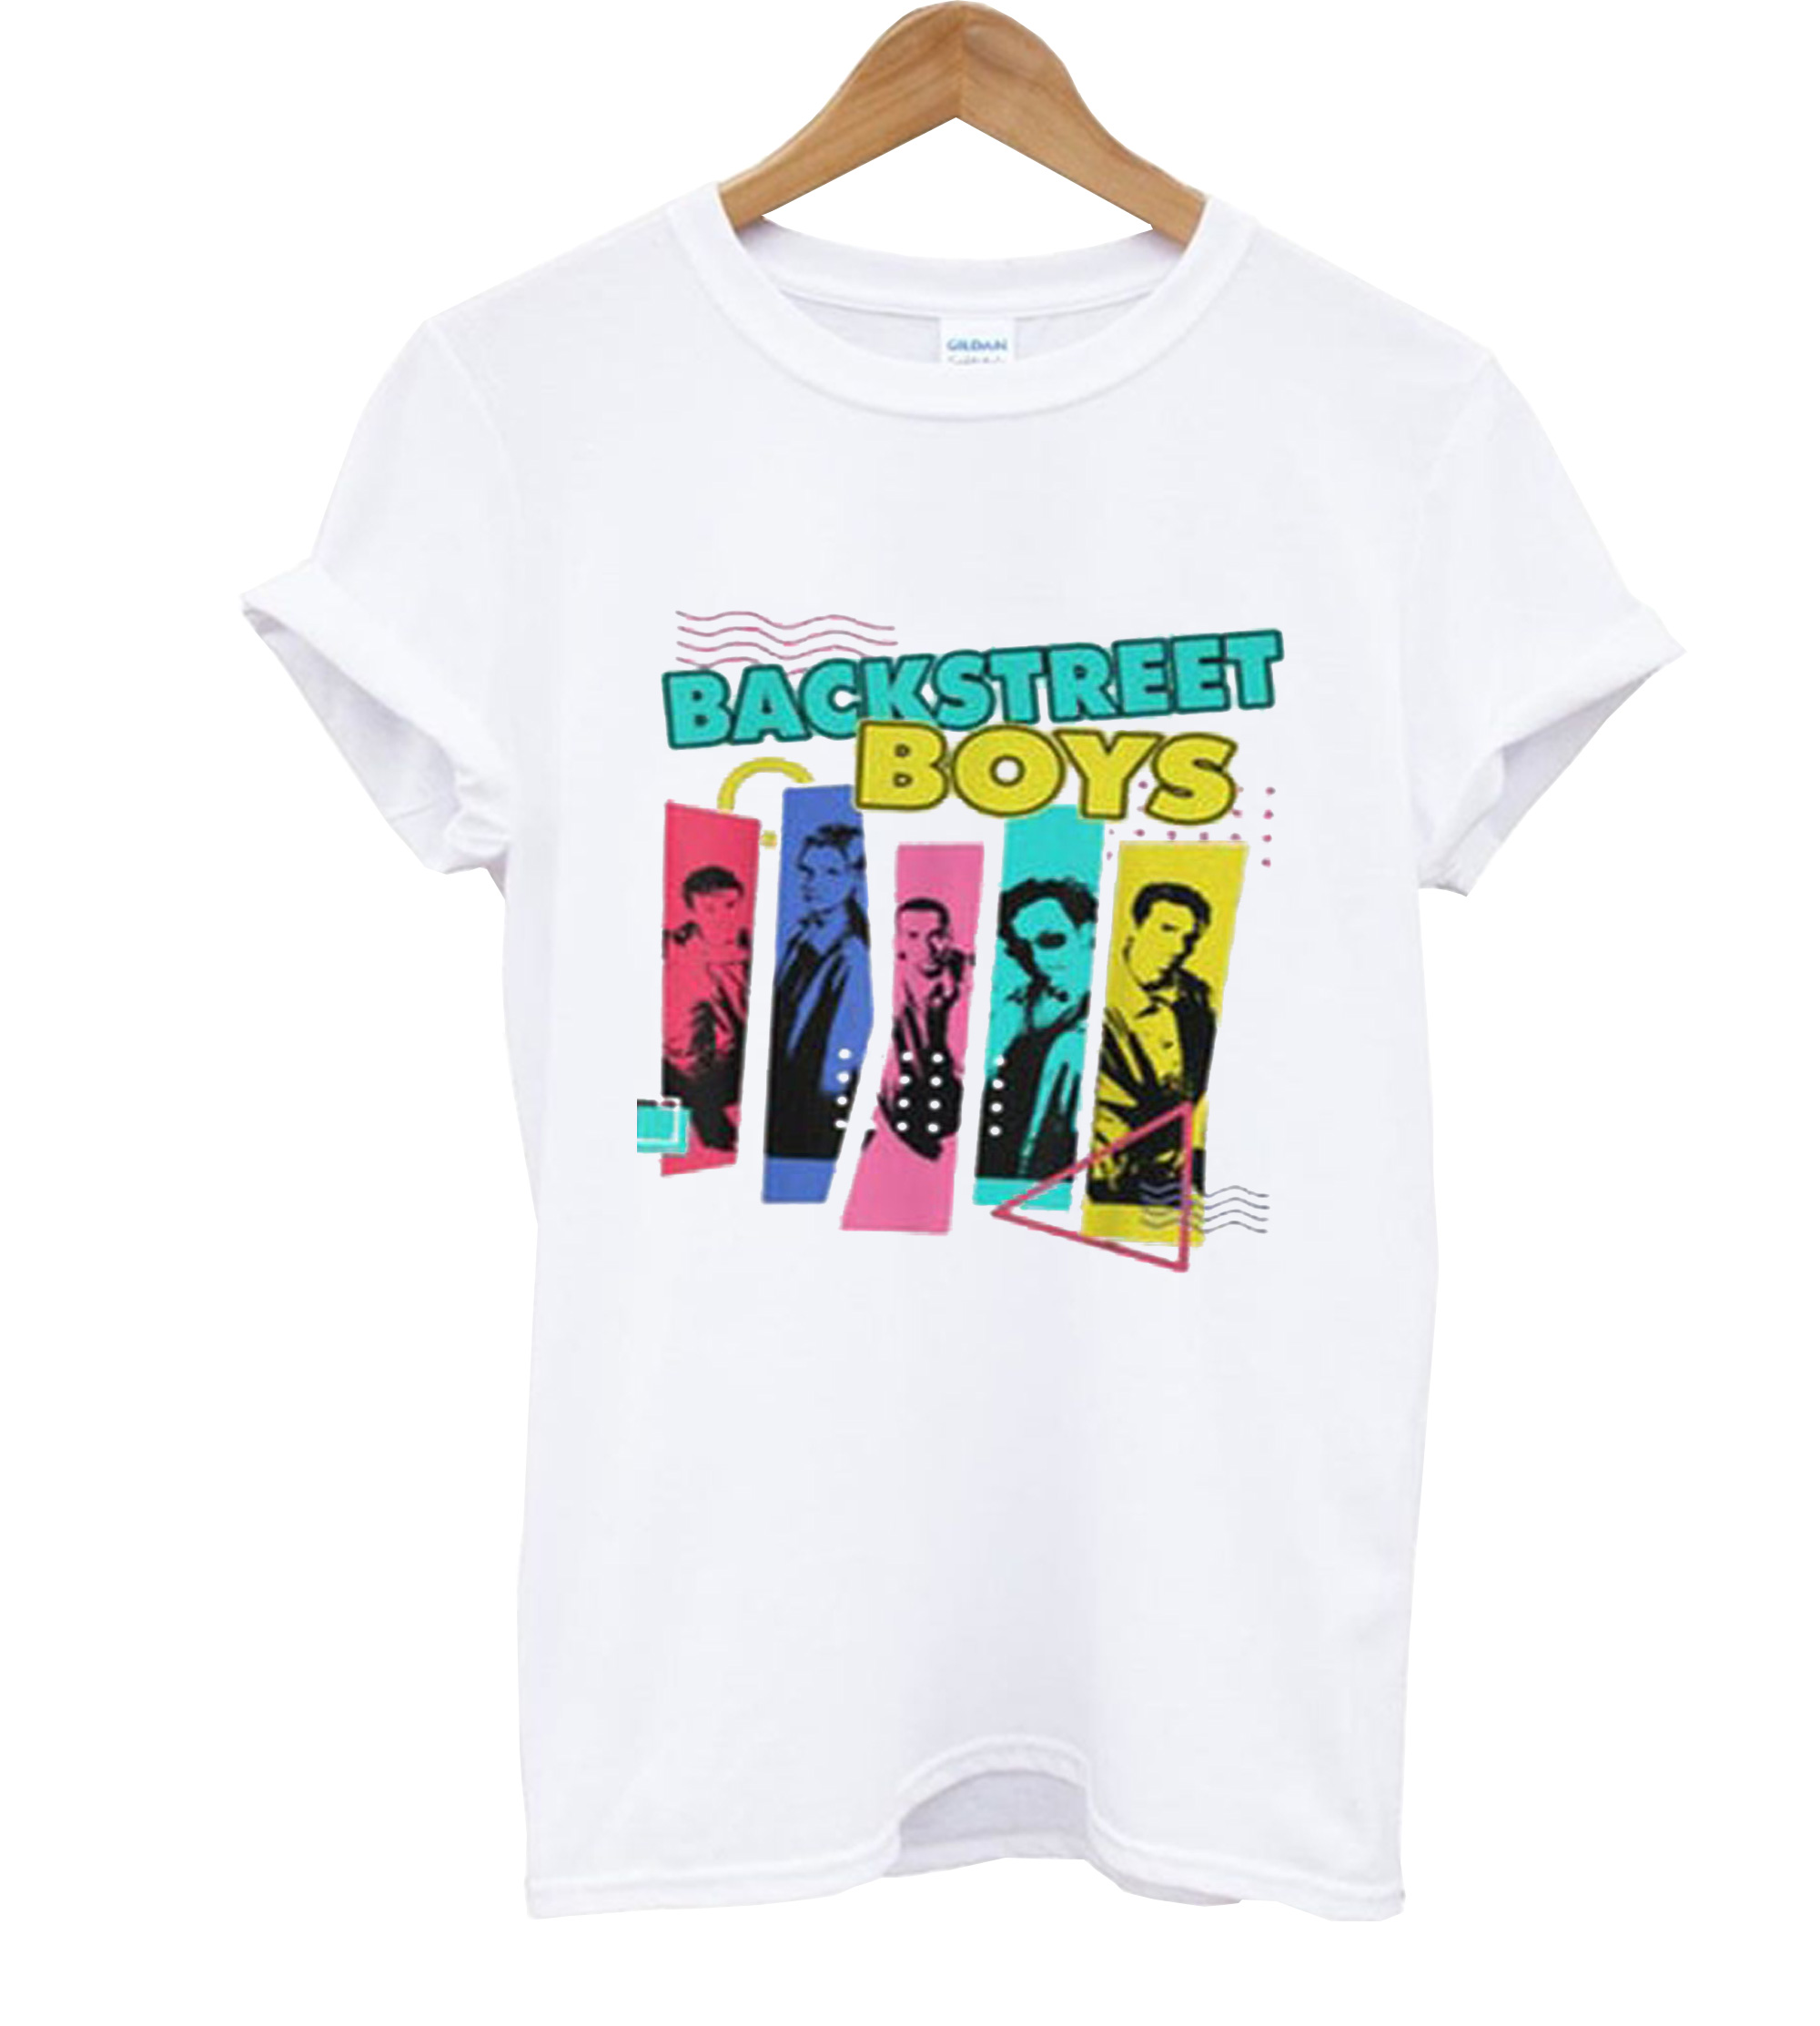 backstreet boys shirts